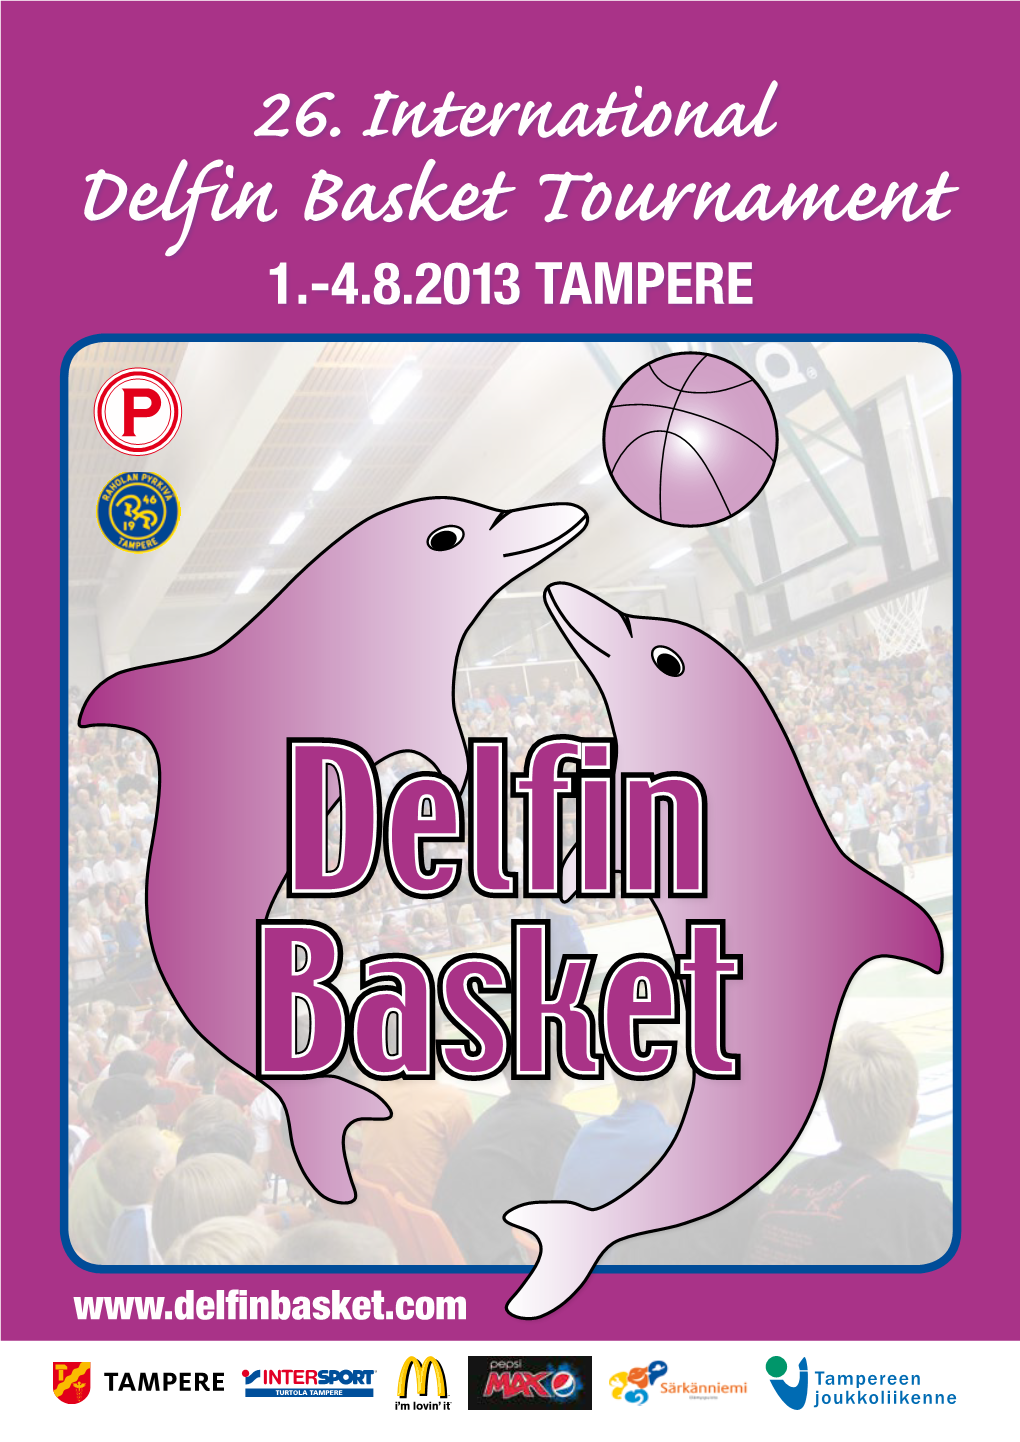 Delfin Basket Tournament 1.-4.8.2013 TAMPERE